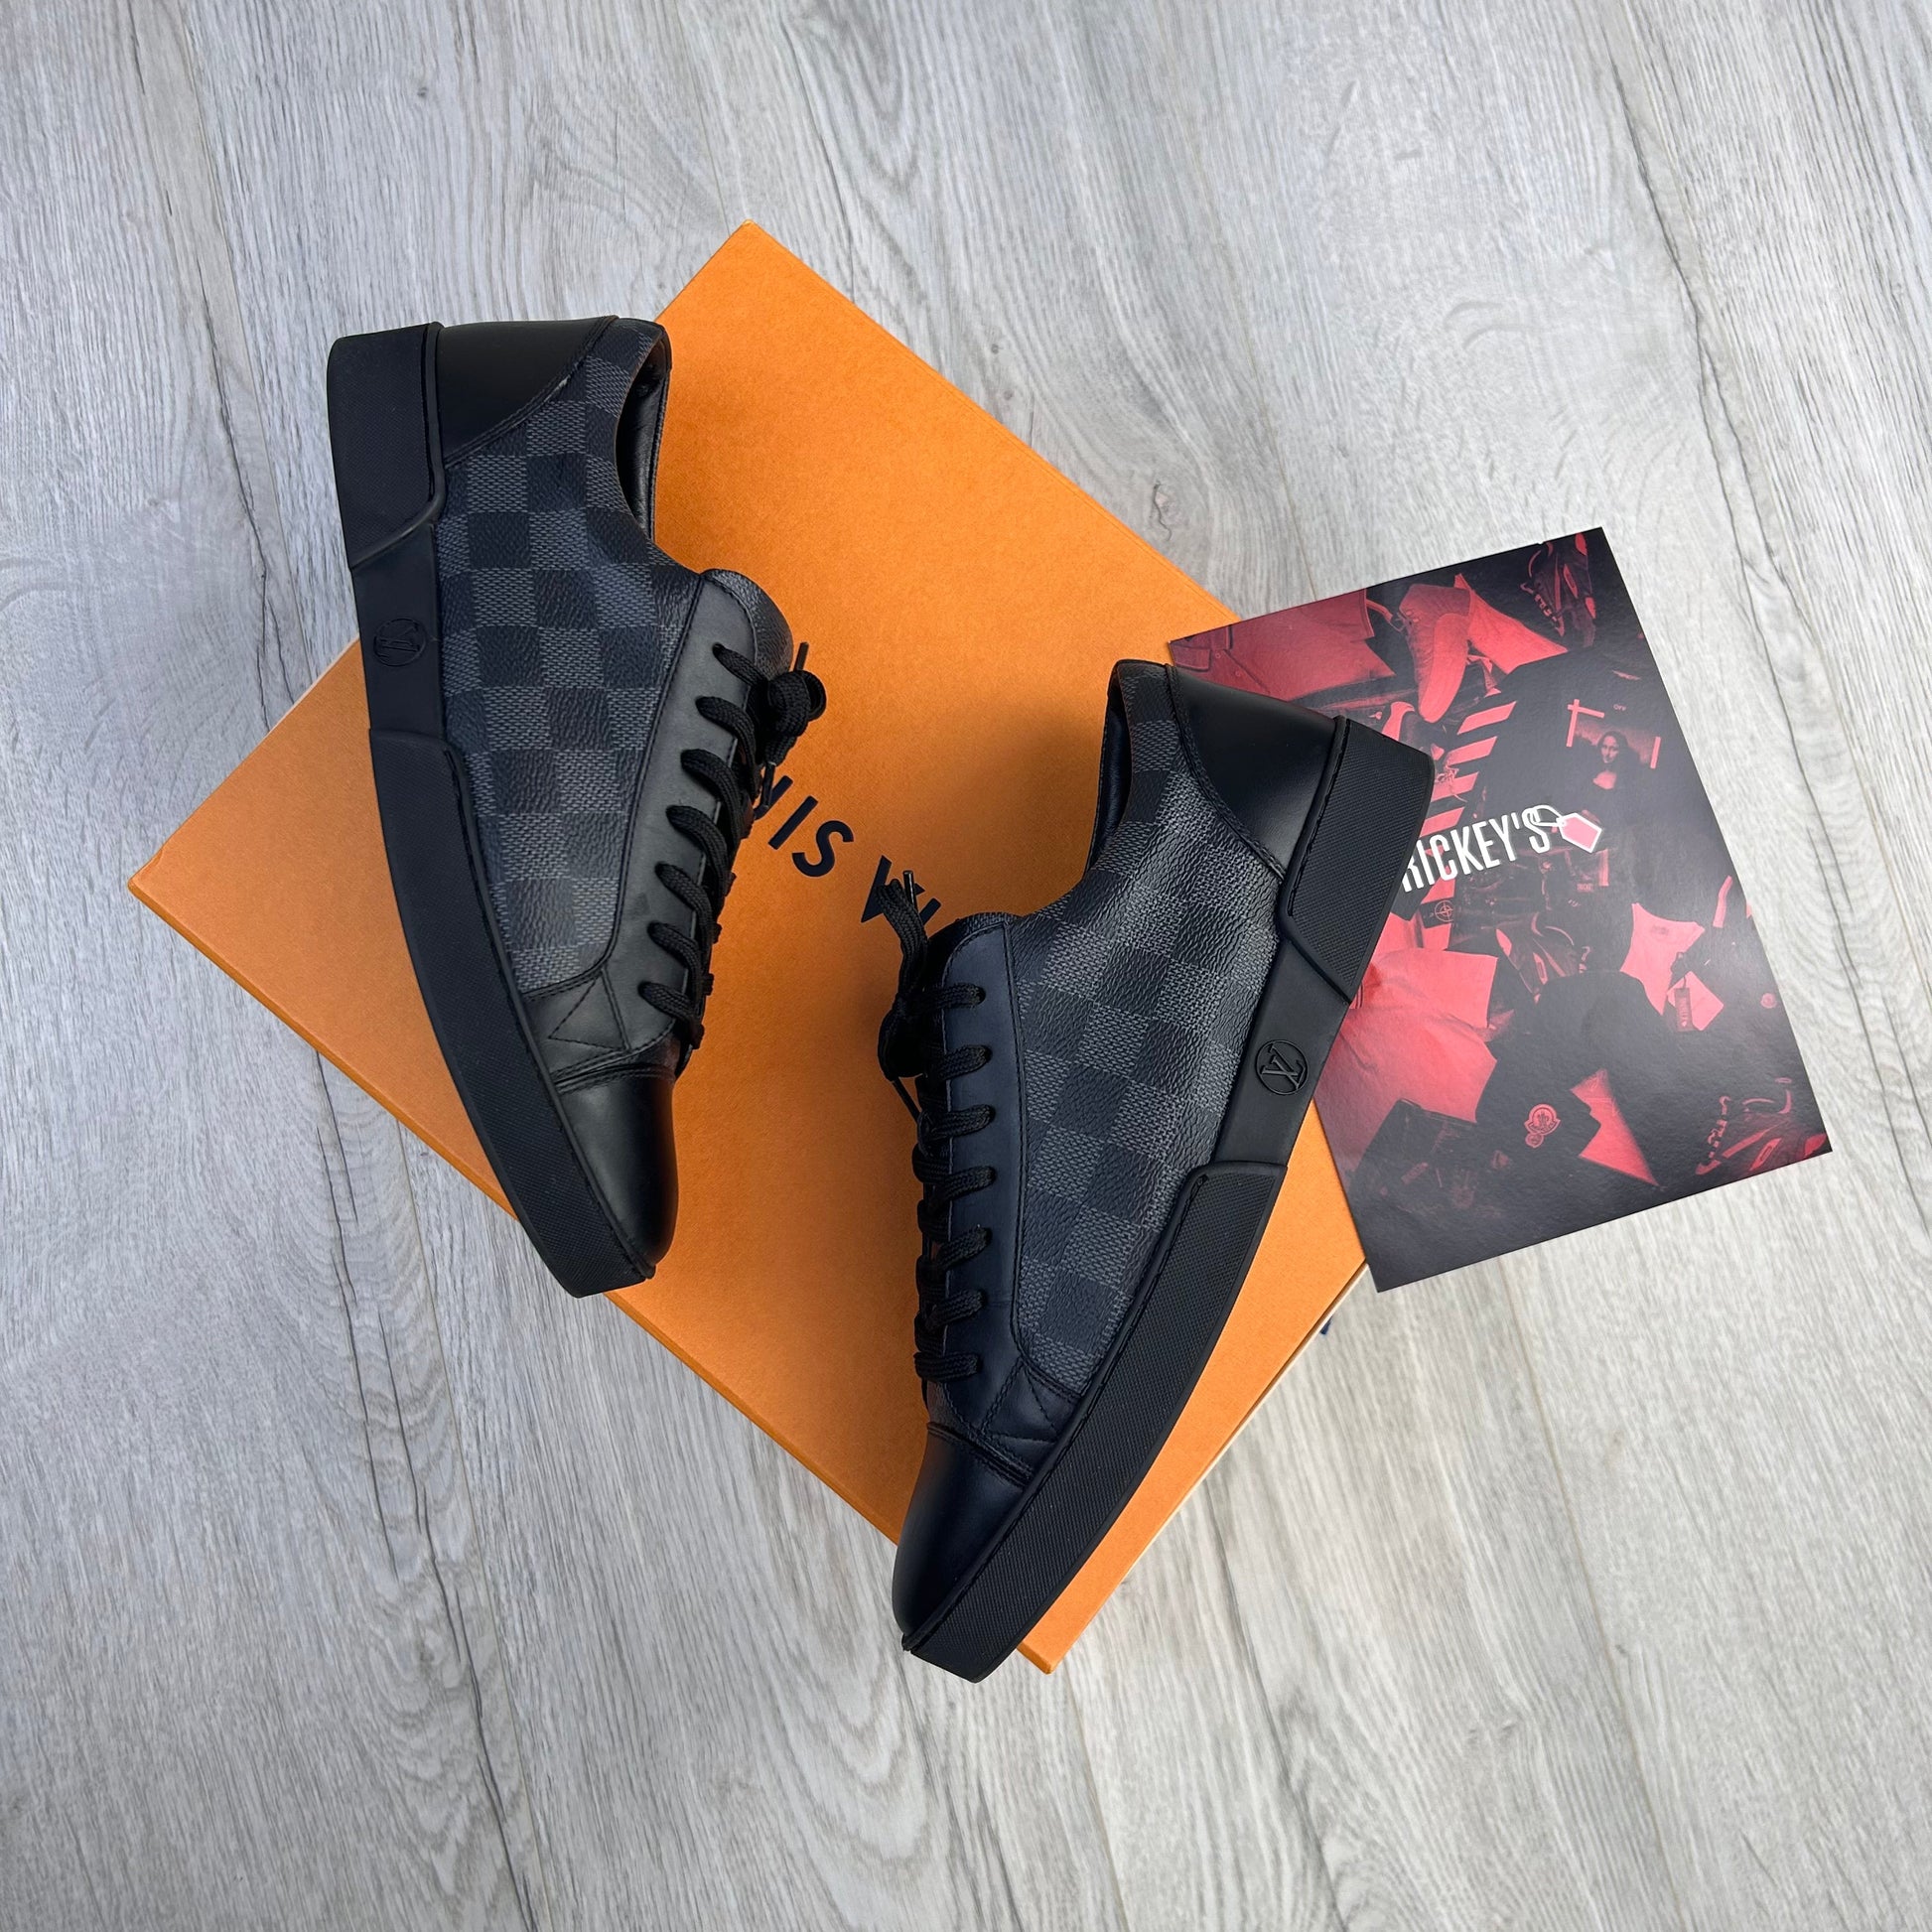 Louis Vuitton, Shoes, Black Match Up Lv Sneakers